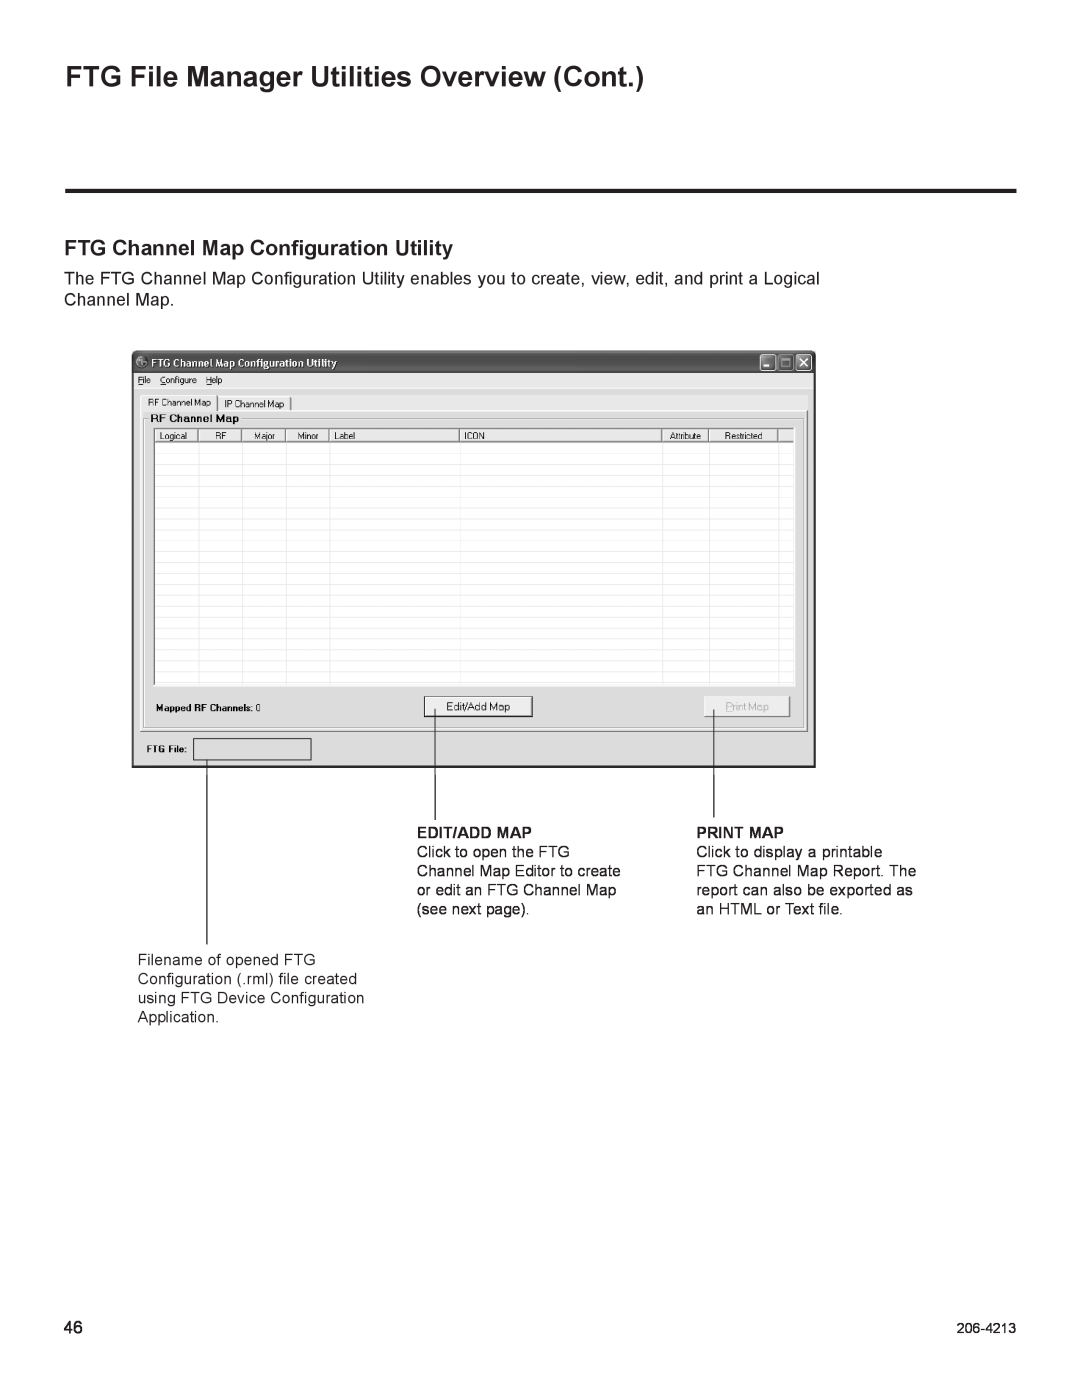 LG Electronics 42LT670H, 55LS675H, 37LT670H FTG File Manager Utilities Overview Cont, FTG Channel Map Configuration Utility 